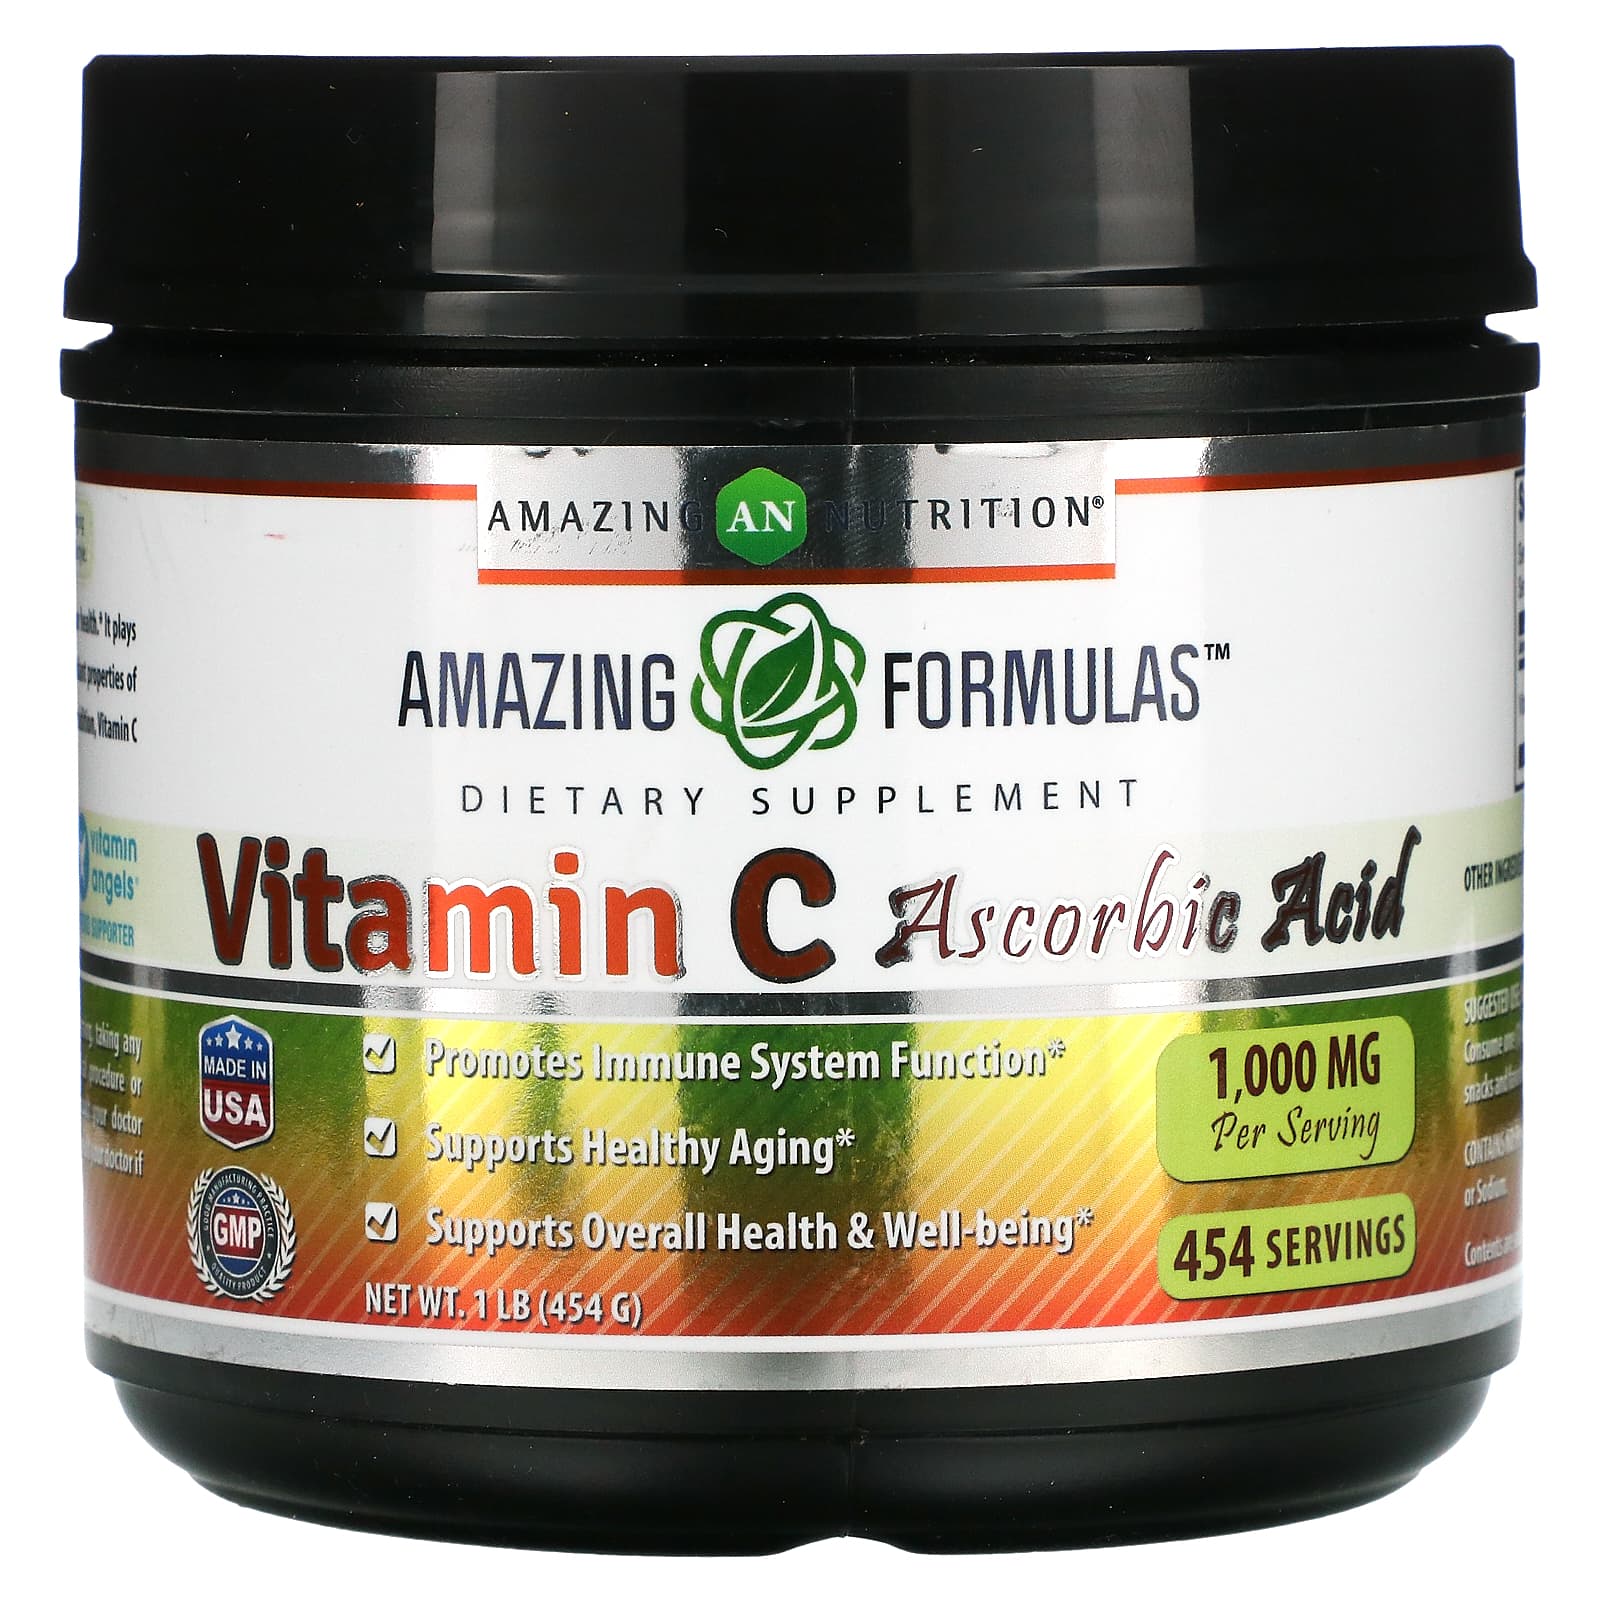 Витамин C Amazing Nutrition аскорбиновая кислота, 454 г nutribiotic immunity аскорбиновая кислота 100% чистый витамин c 454 г 16 унций